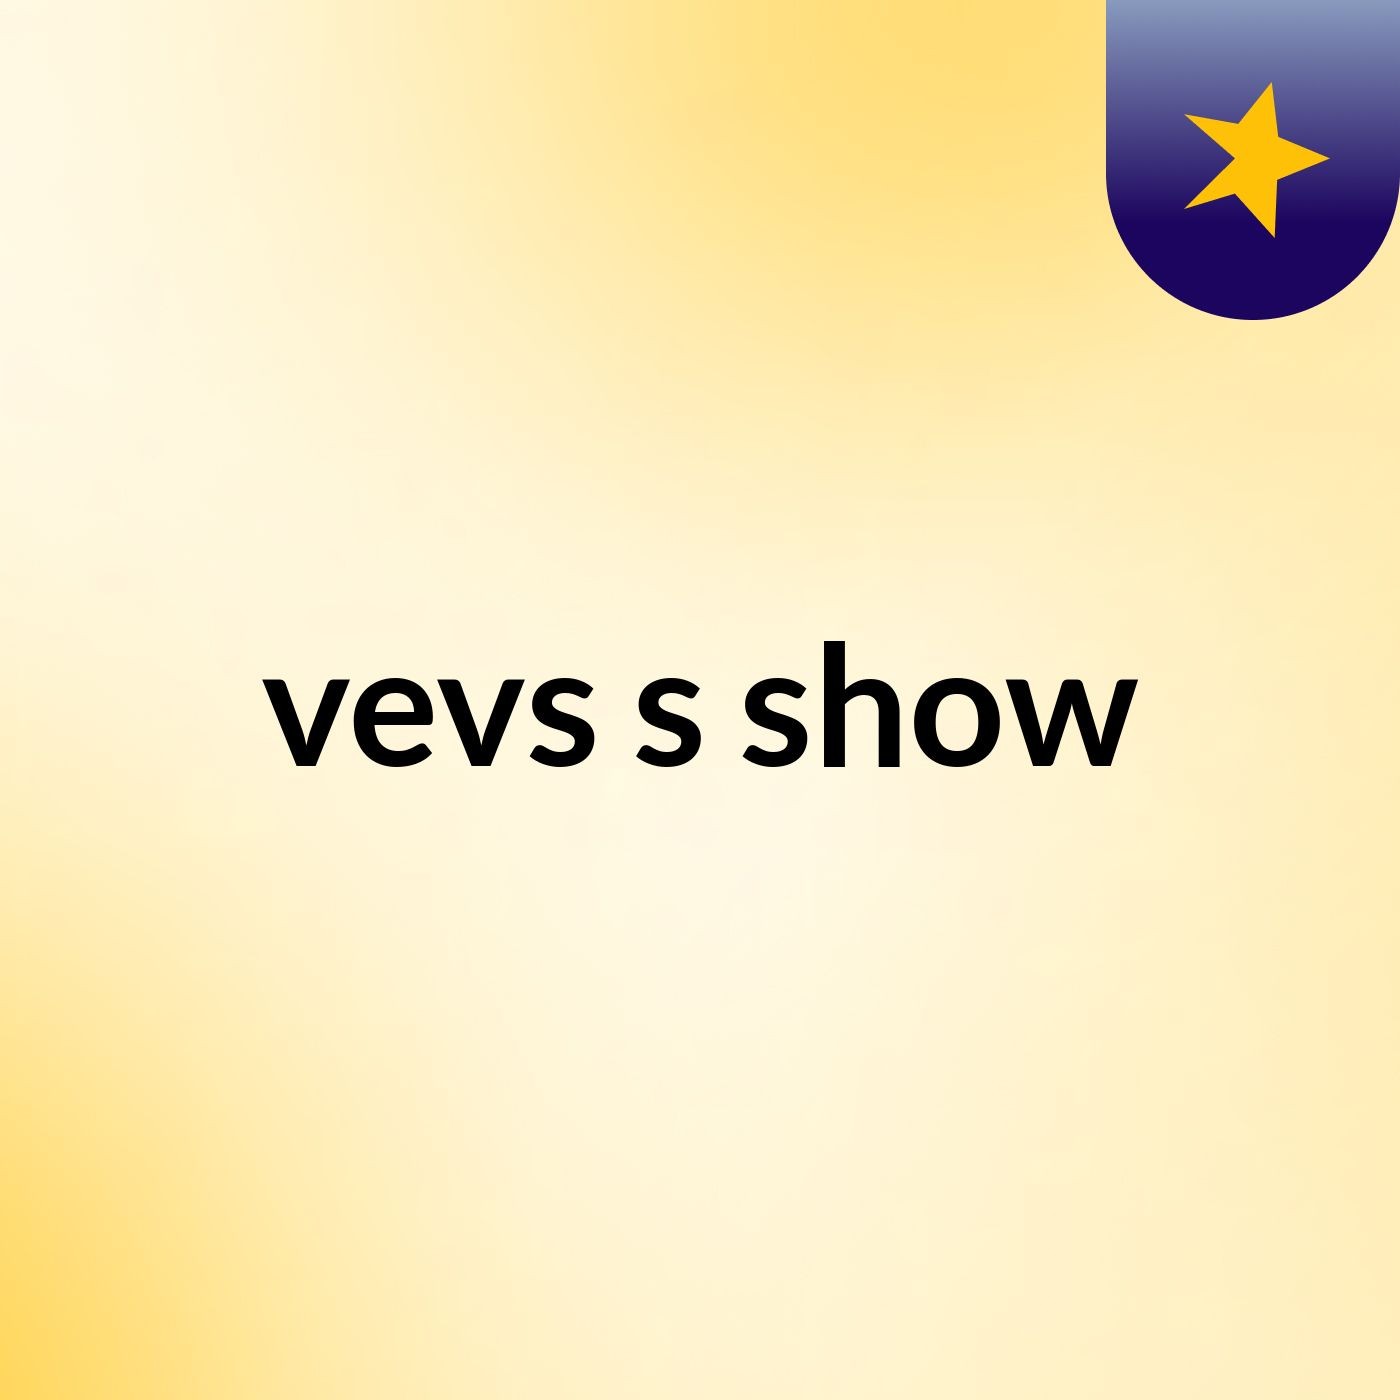 vevs's show